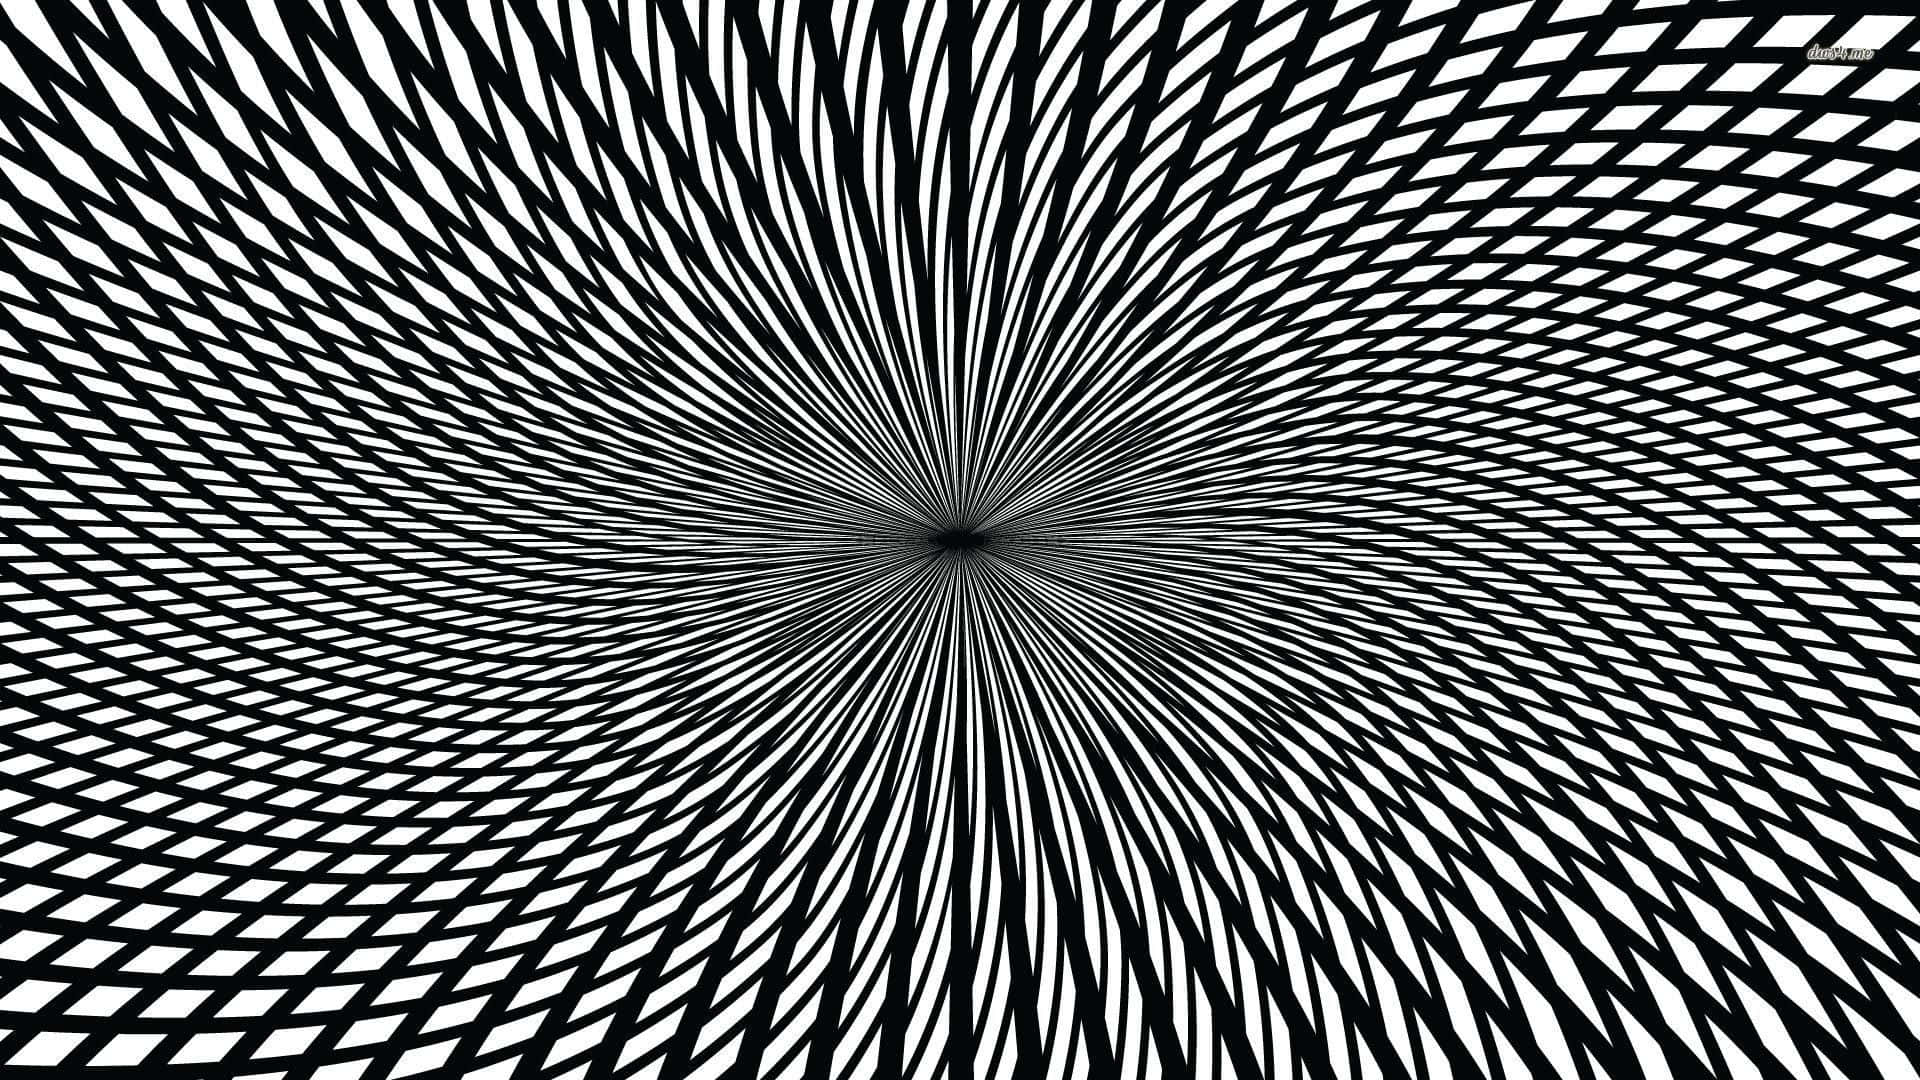 Mind-Bending Patterns of Illusion